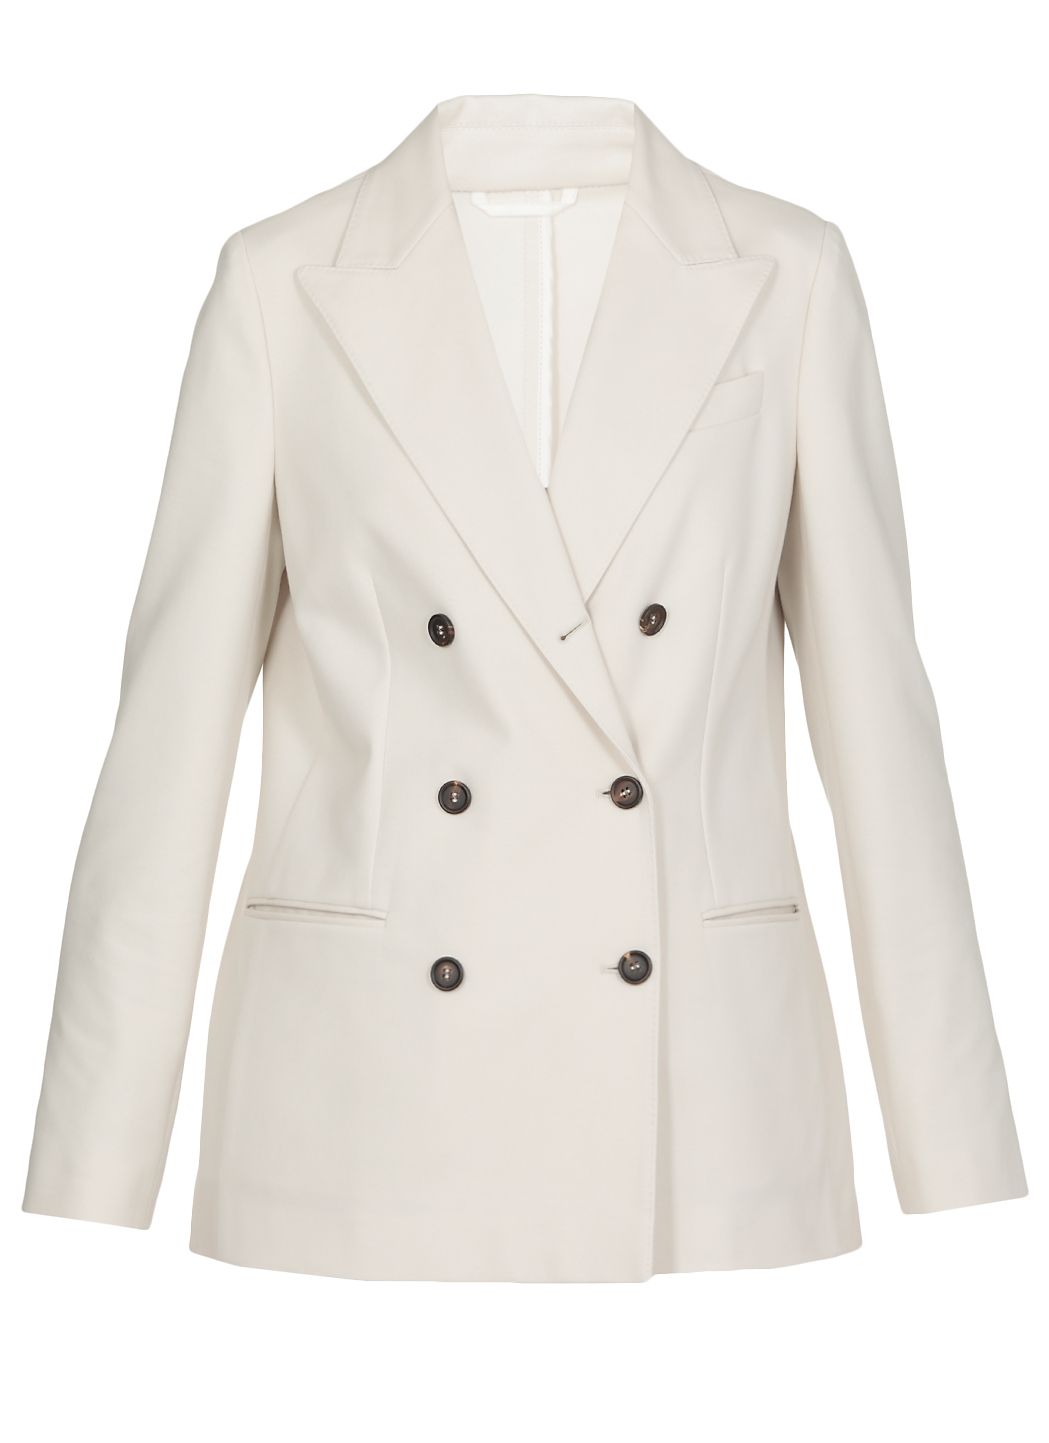 Cotton interlock Couture jacket